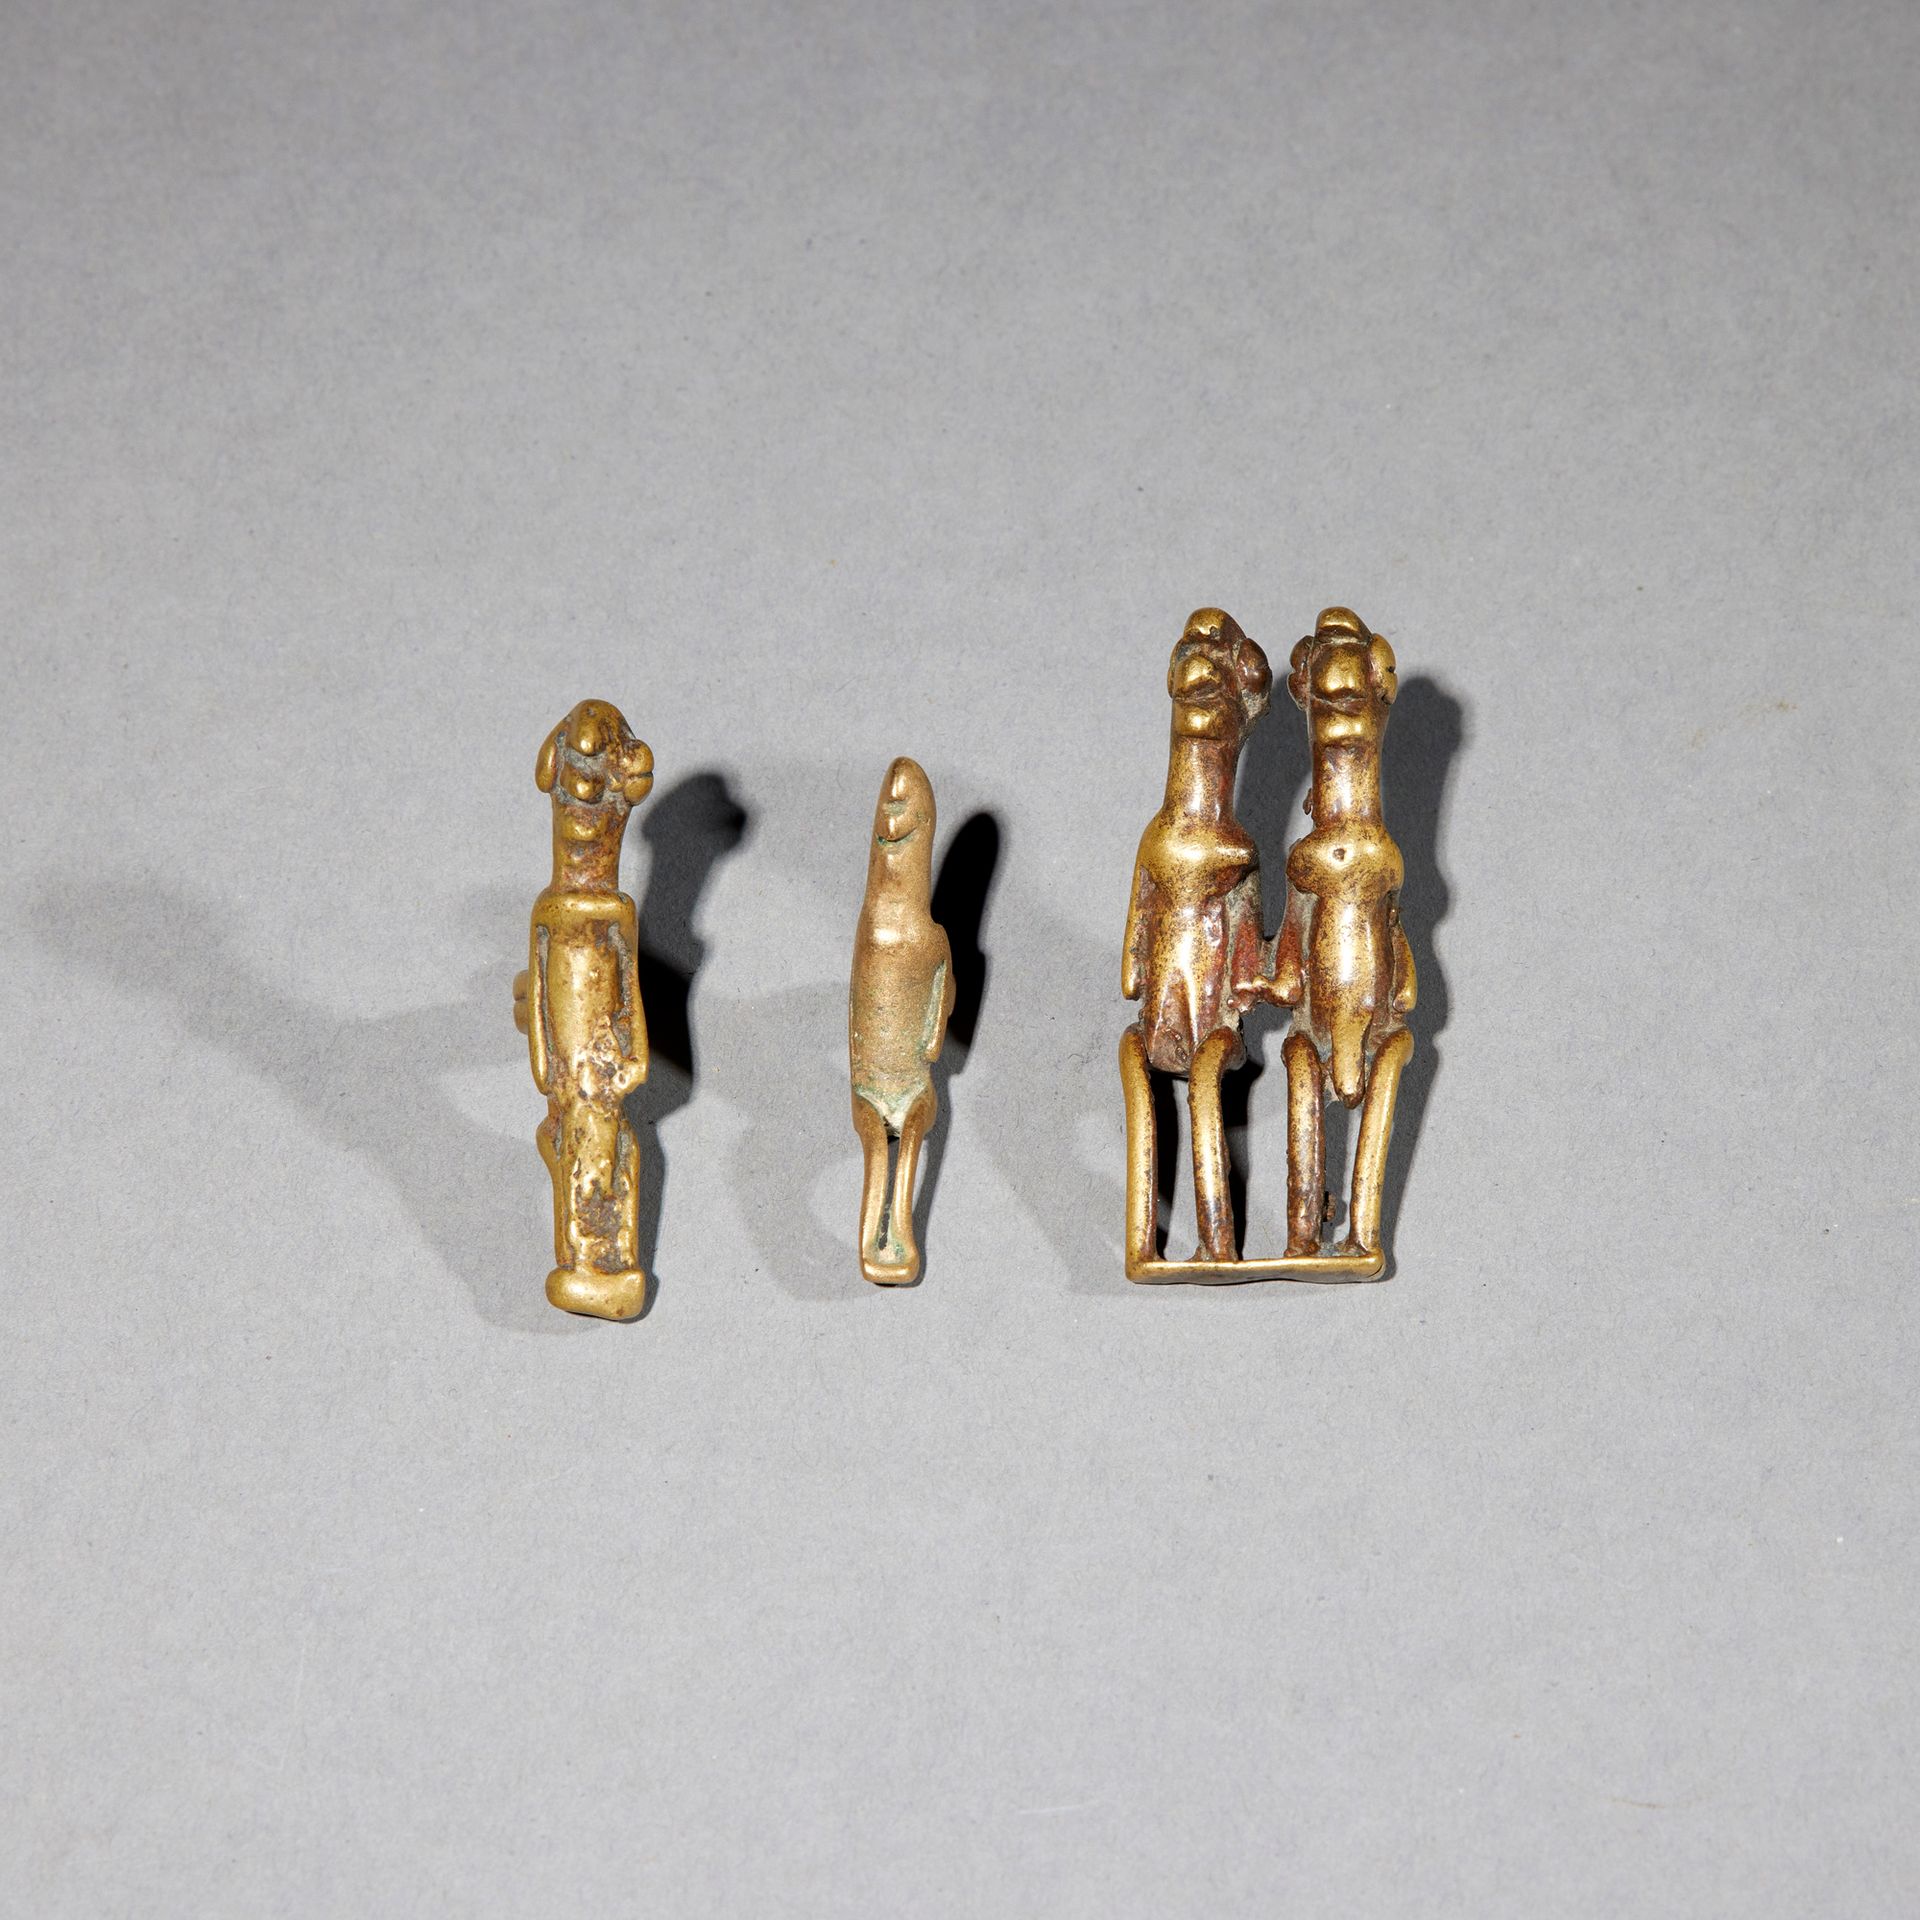 Null 三件Pwo文物

布基纳法索

铜质

H.4.1至5.2厘米



一套三件普沃青铜器人物，包括两个吊坠和一对夫妇。